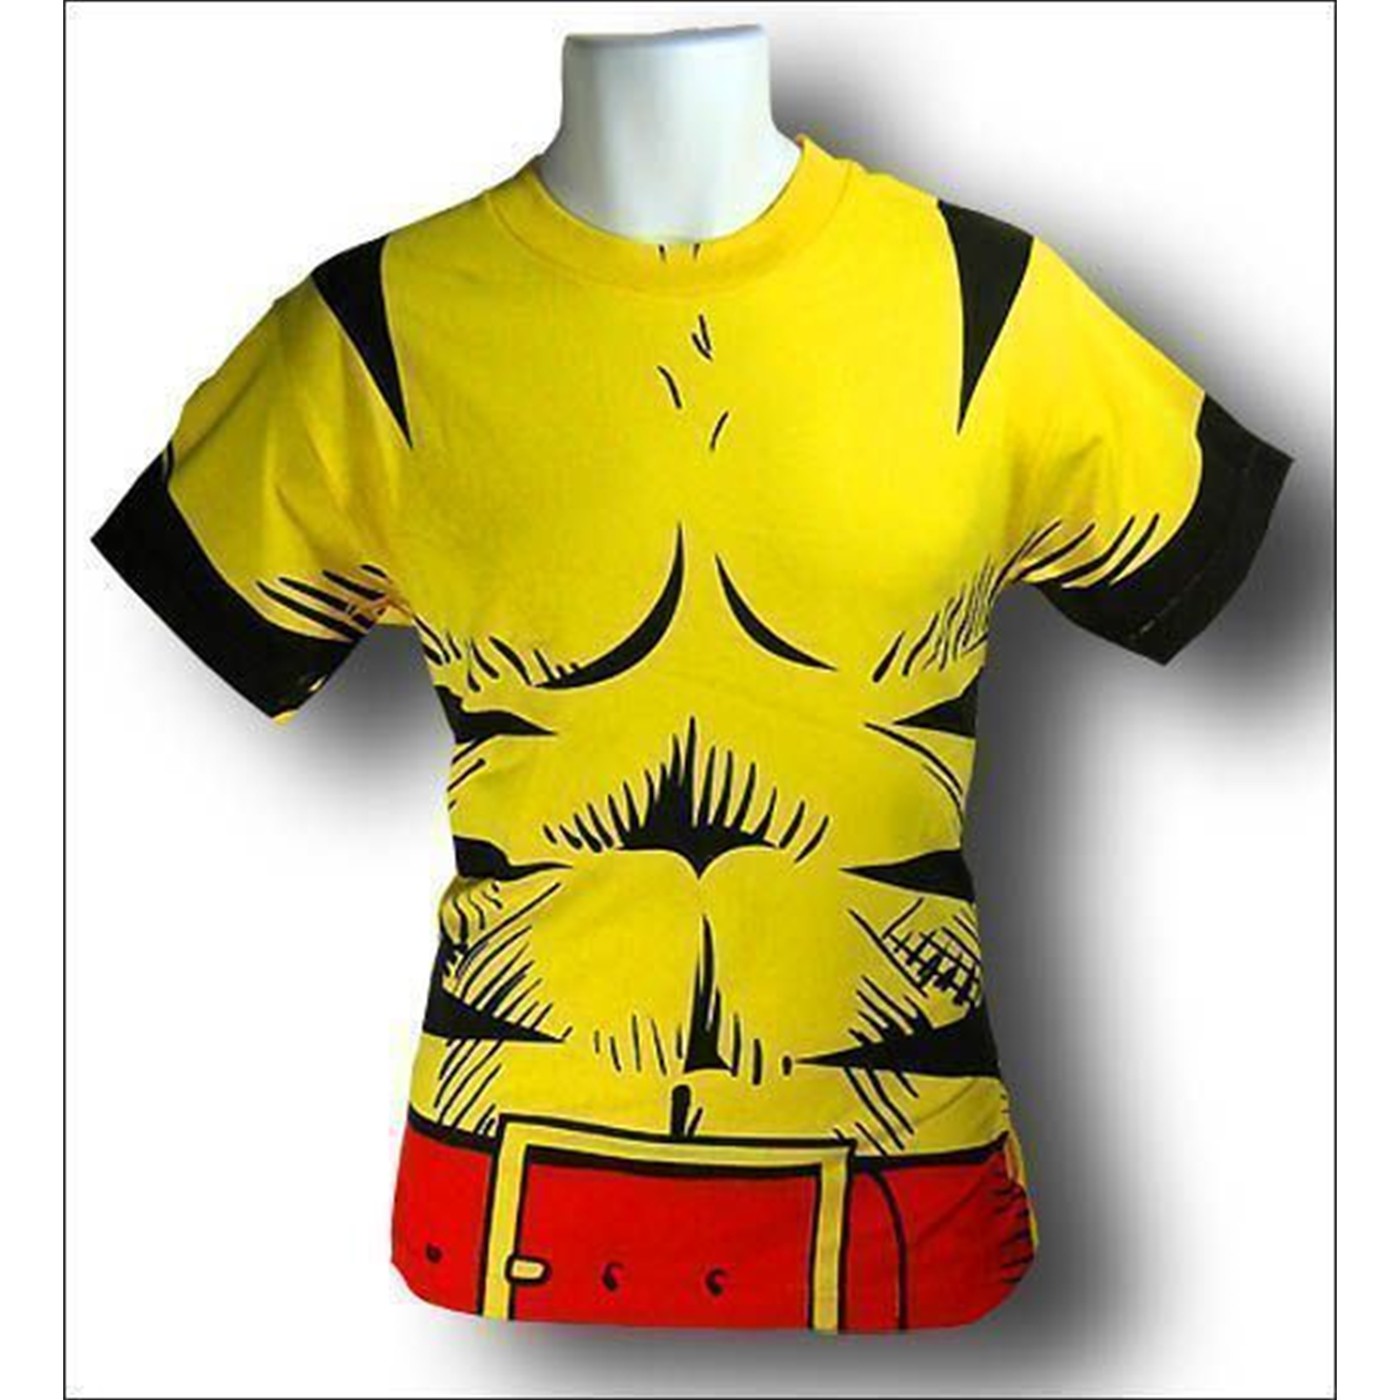 Wolverine Costume T-Shirt